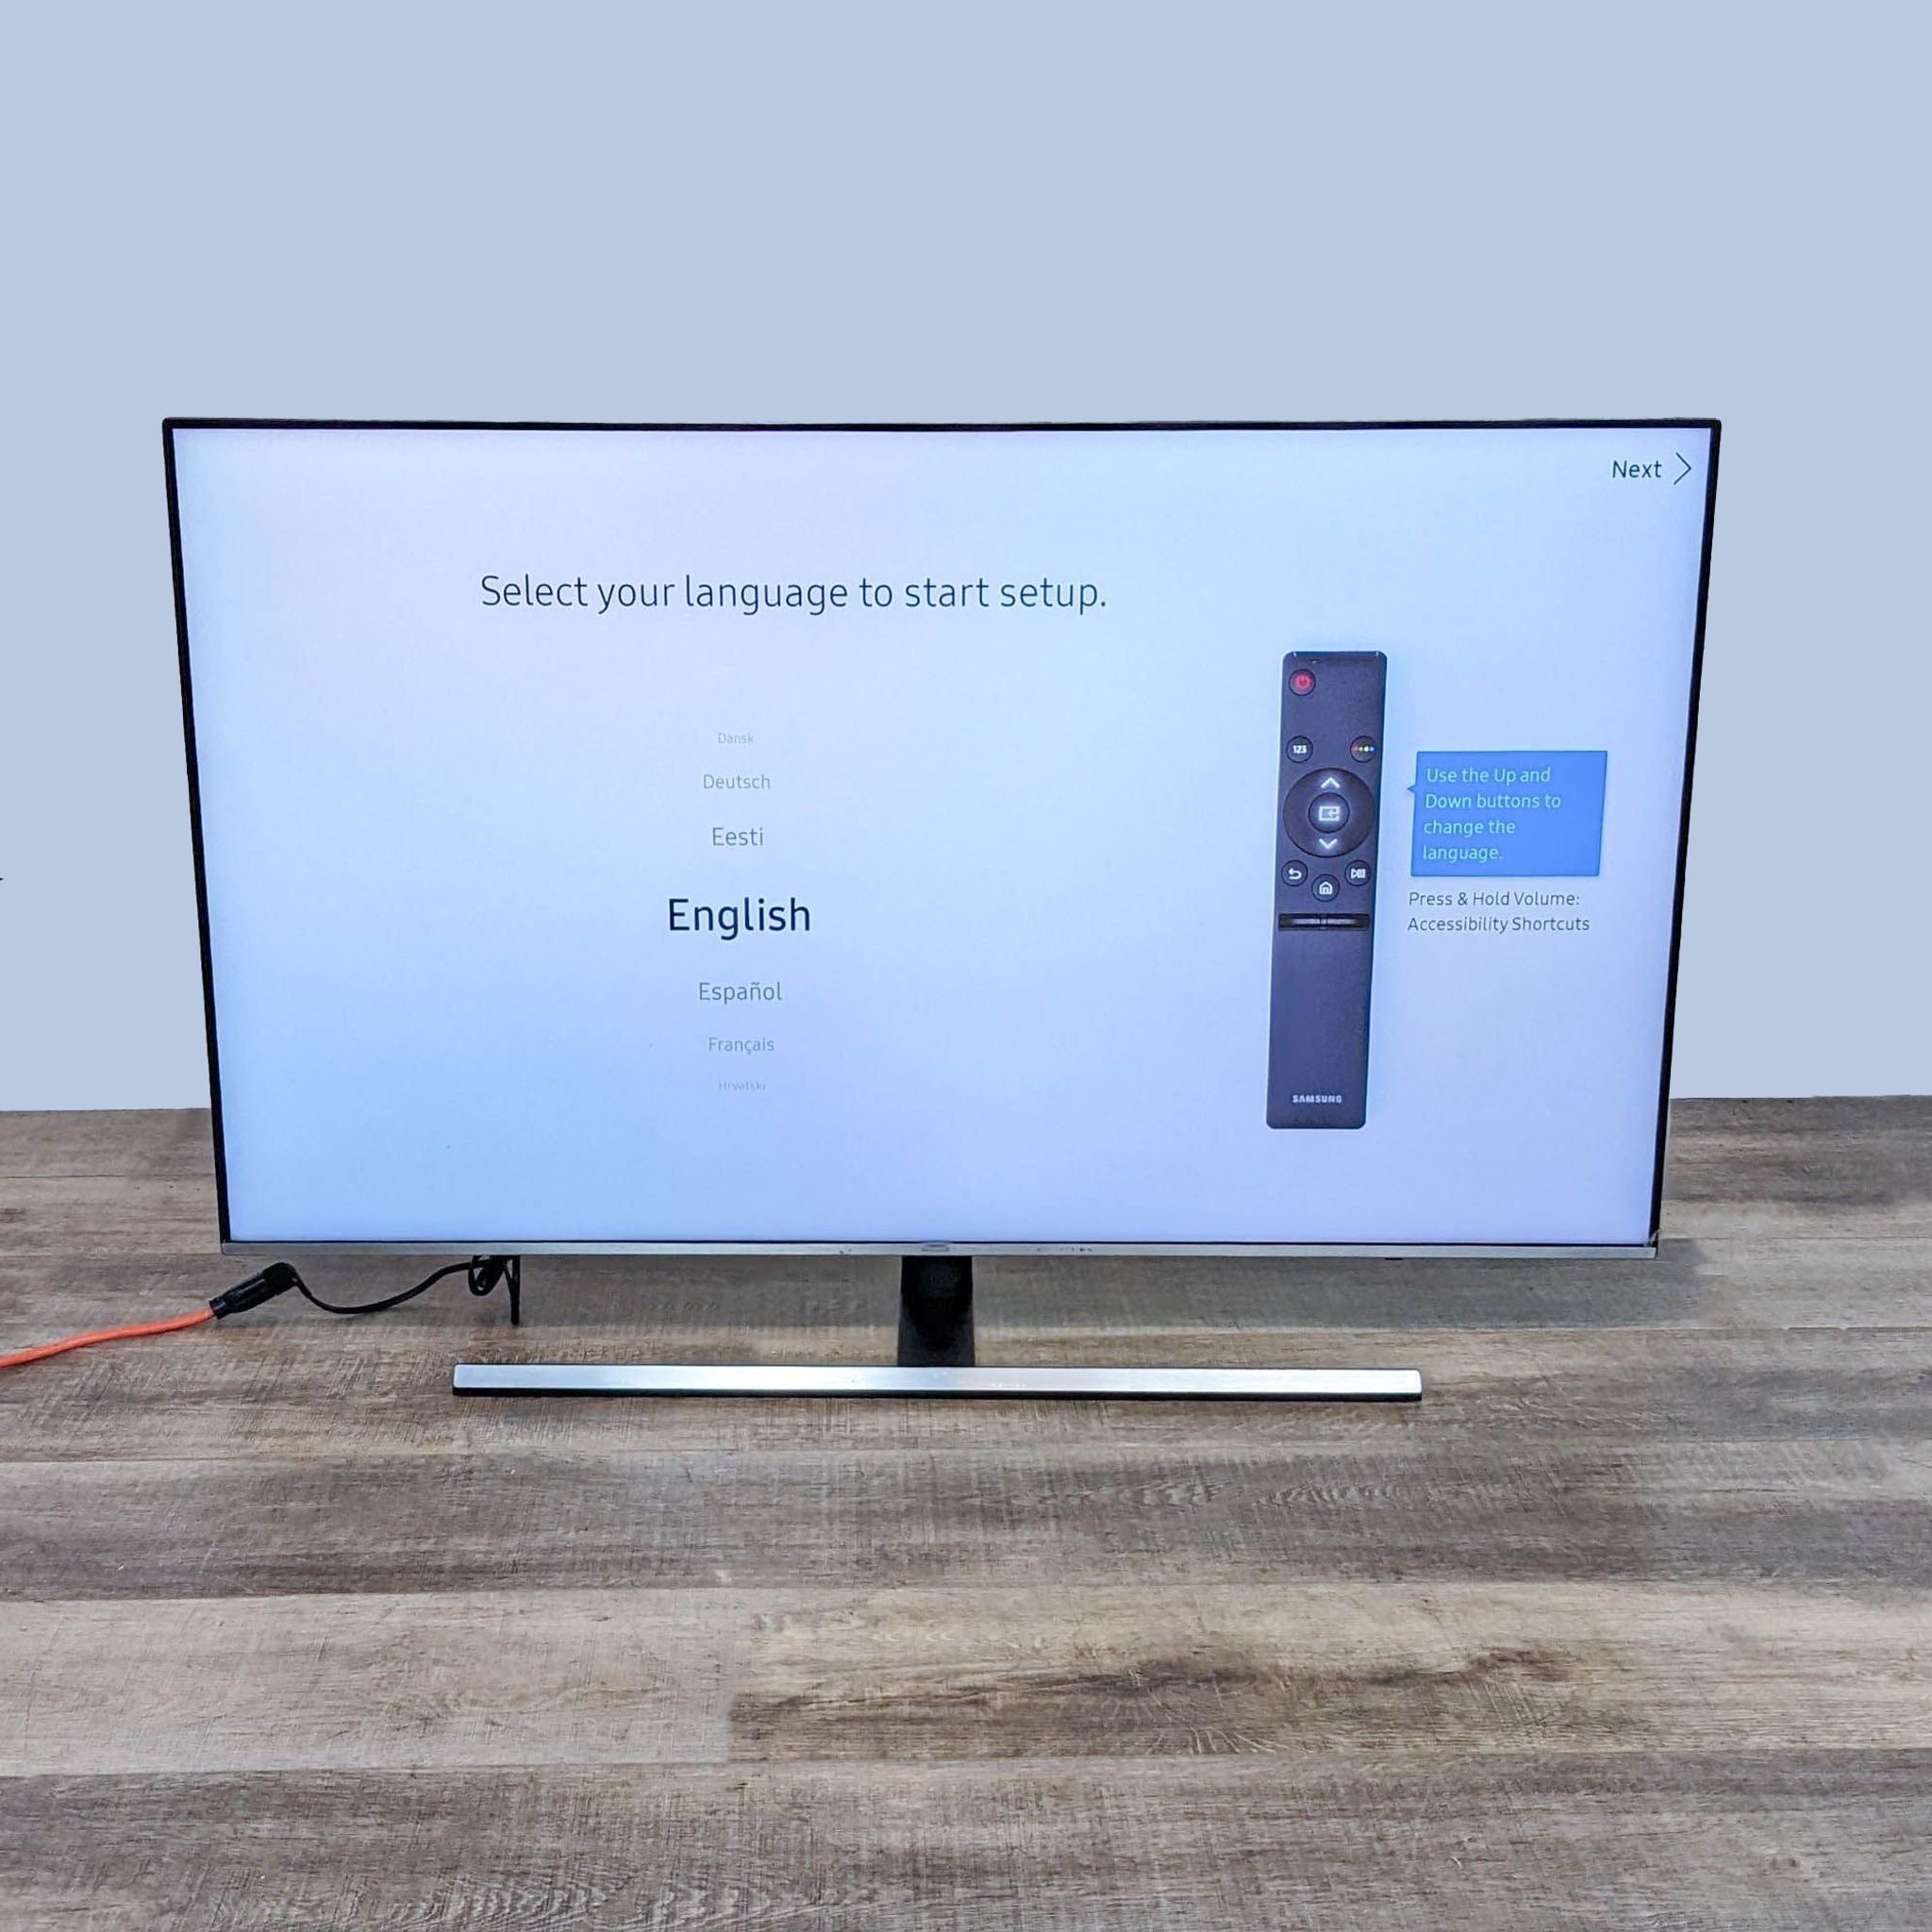 Samsung UN55NU8000F smart TV displaying language selection screen during initial setup, hinting at its interface features.